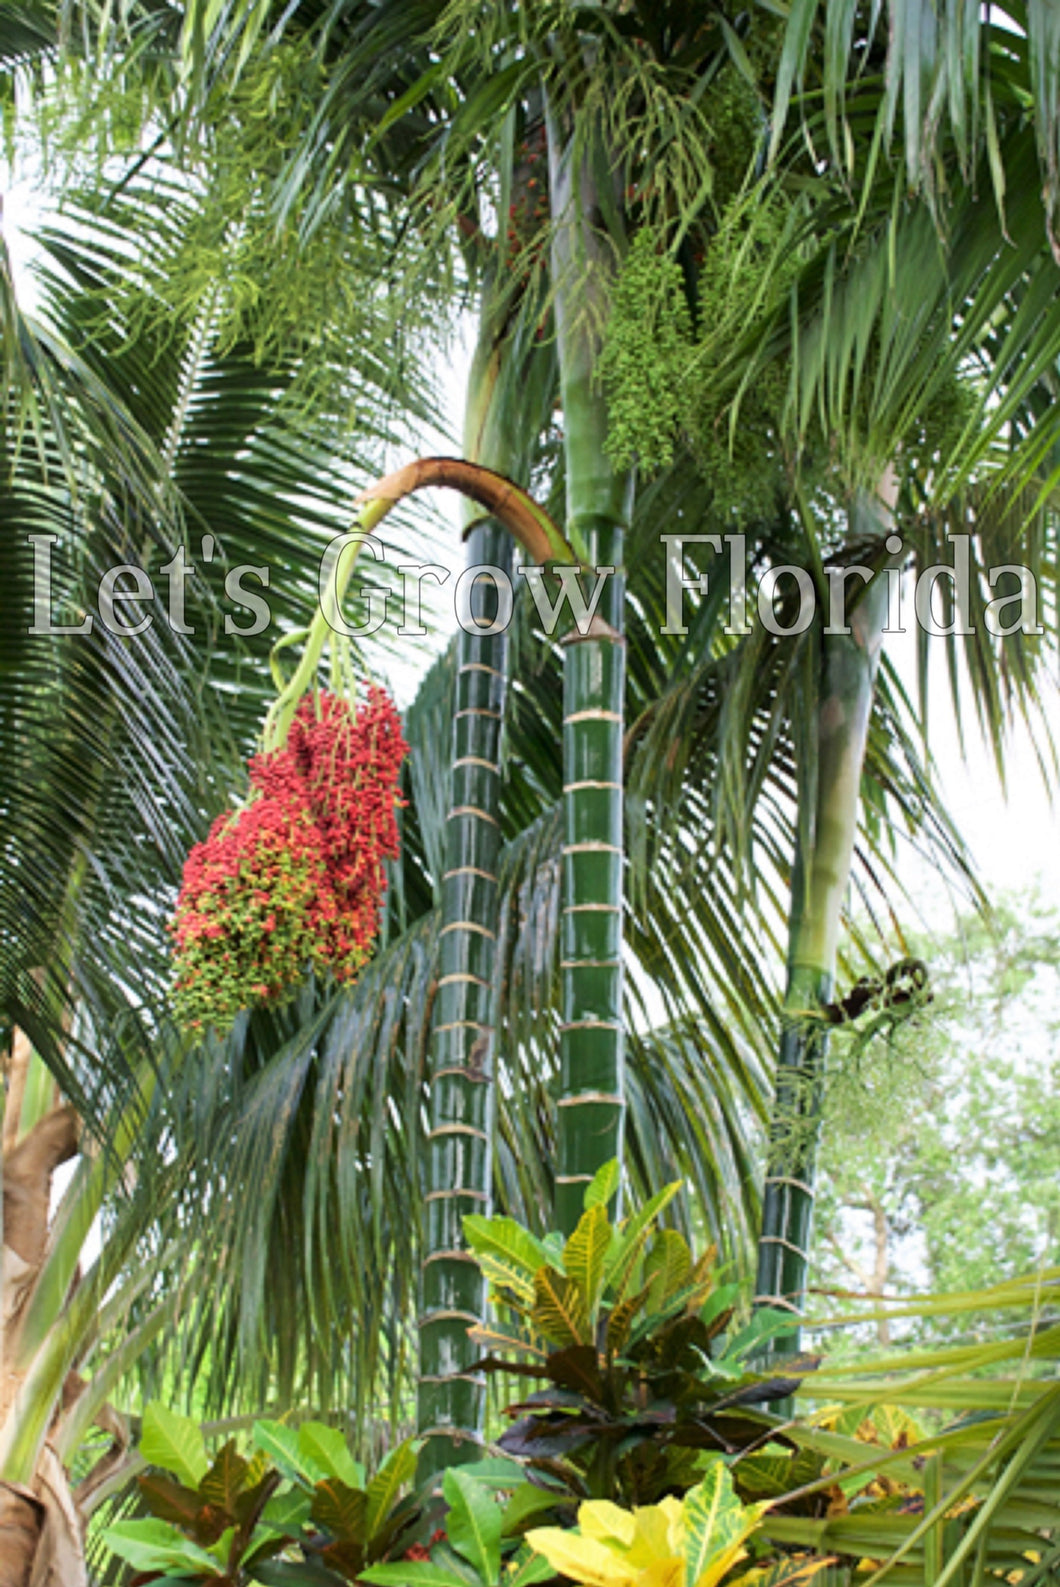 Chrysalidocarpus / Dypsis pembana Palmier en grappes